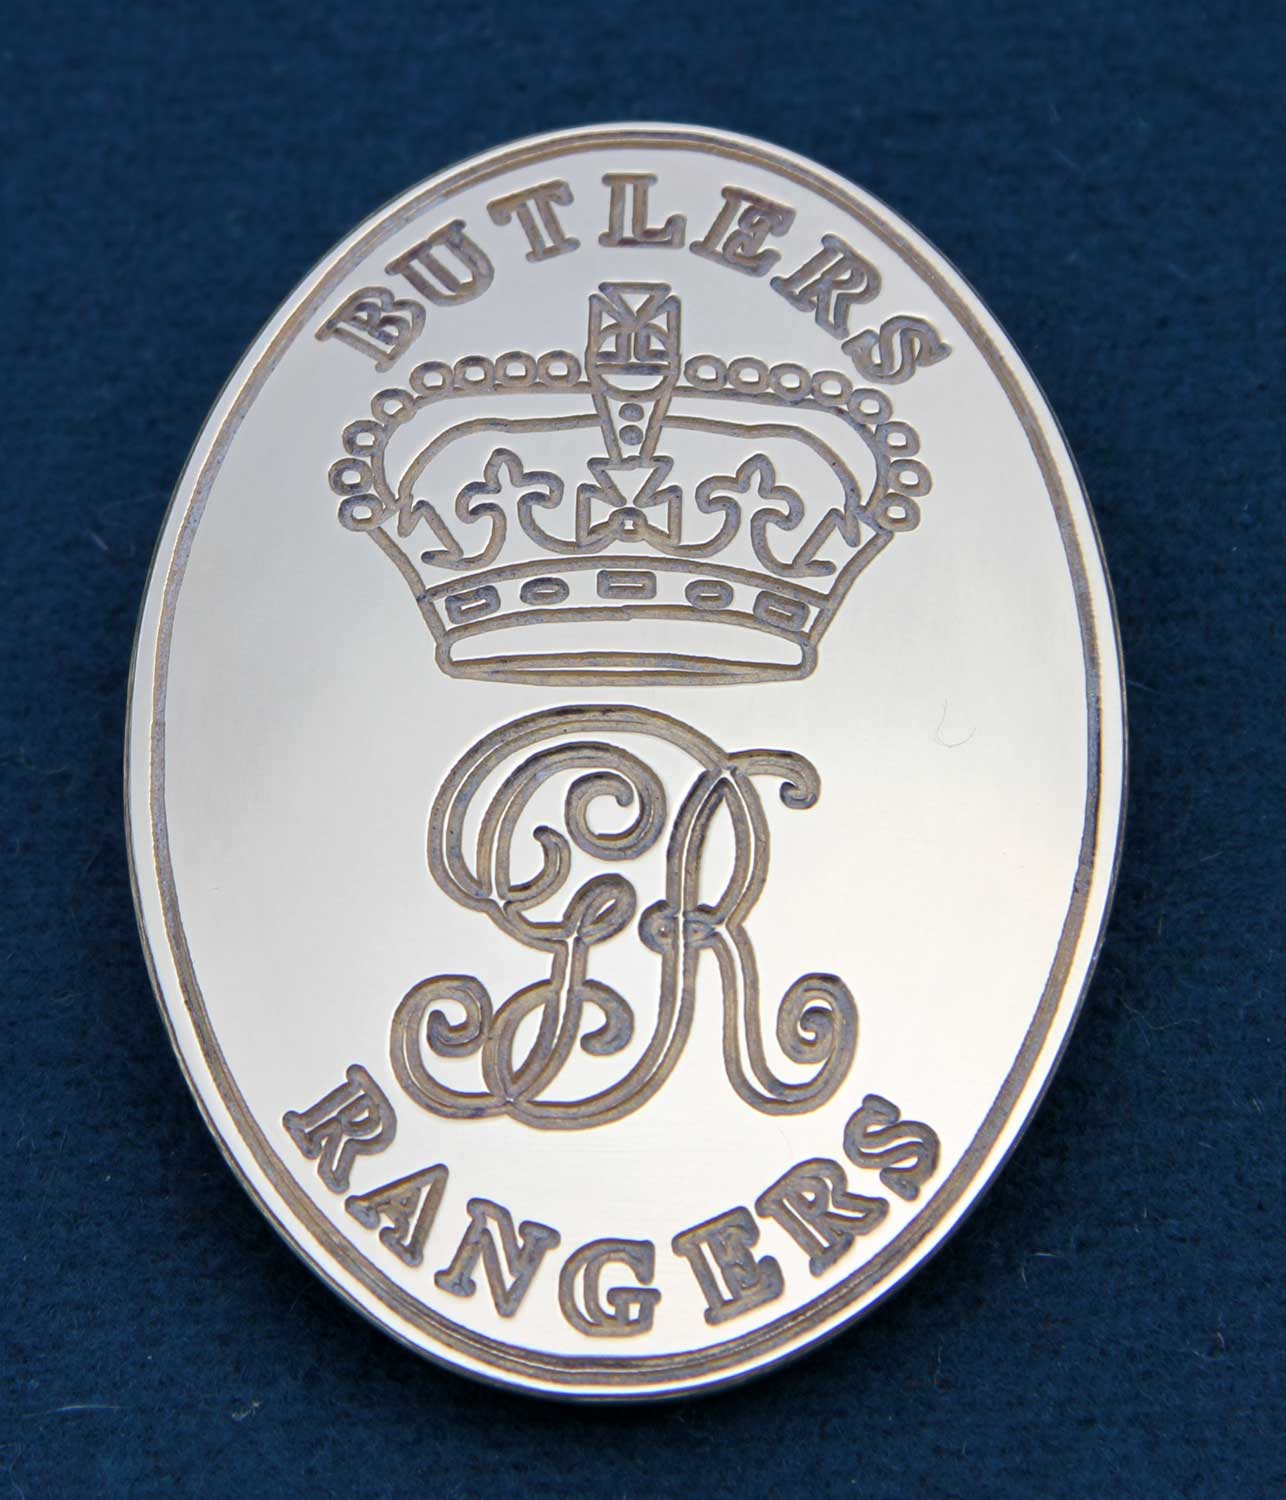 British, Butler's Rangers